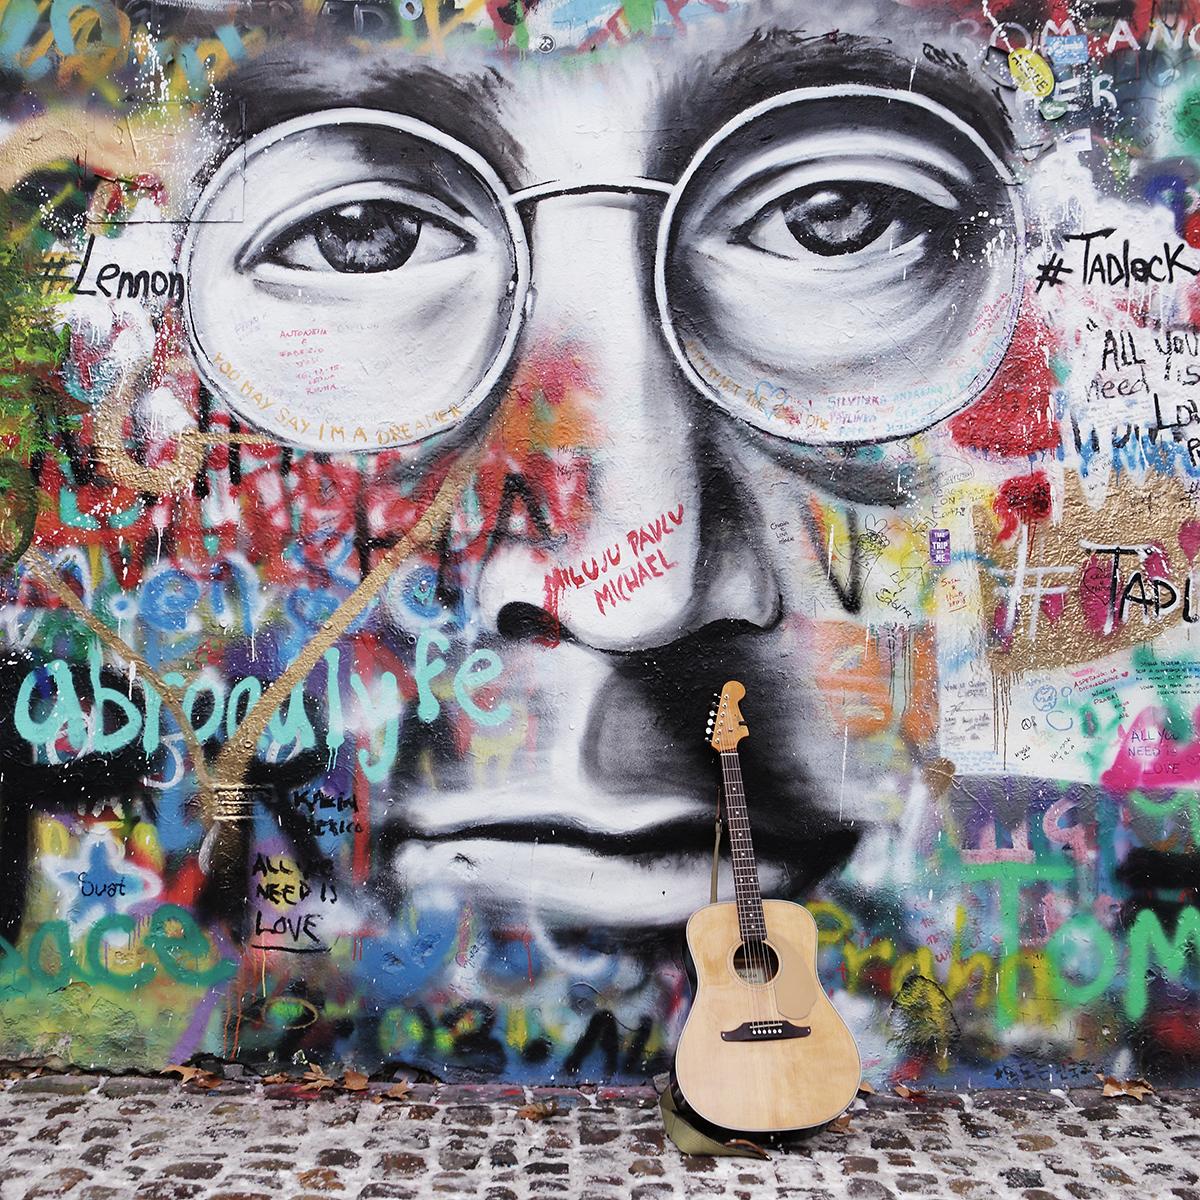 The John Lennon Wall tells the story of the Czech people’s resistance against communism. (emka74/Shutterstock)